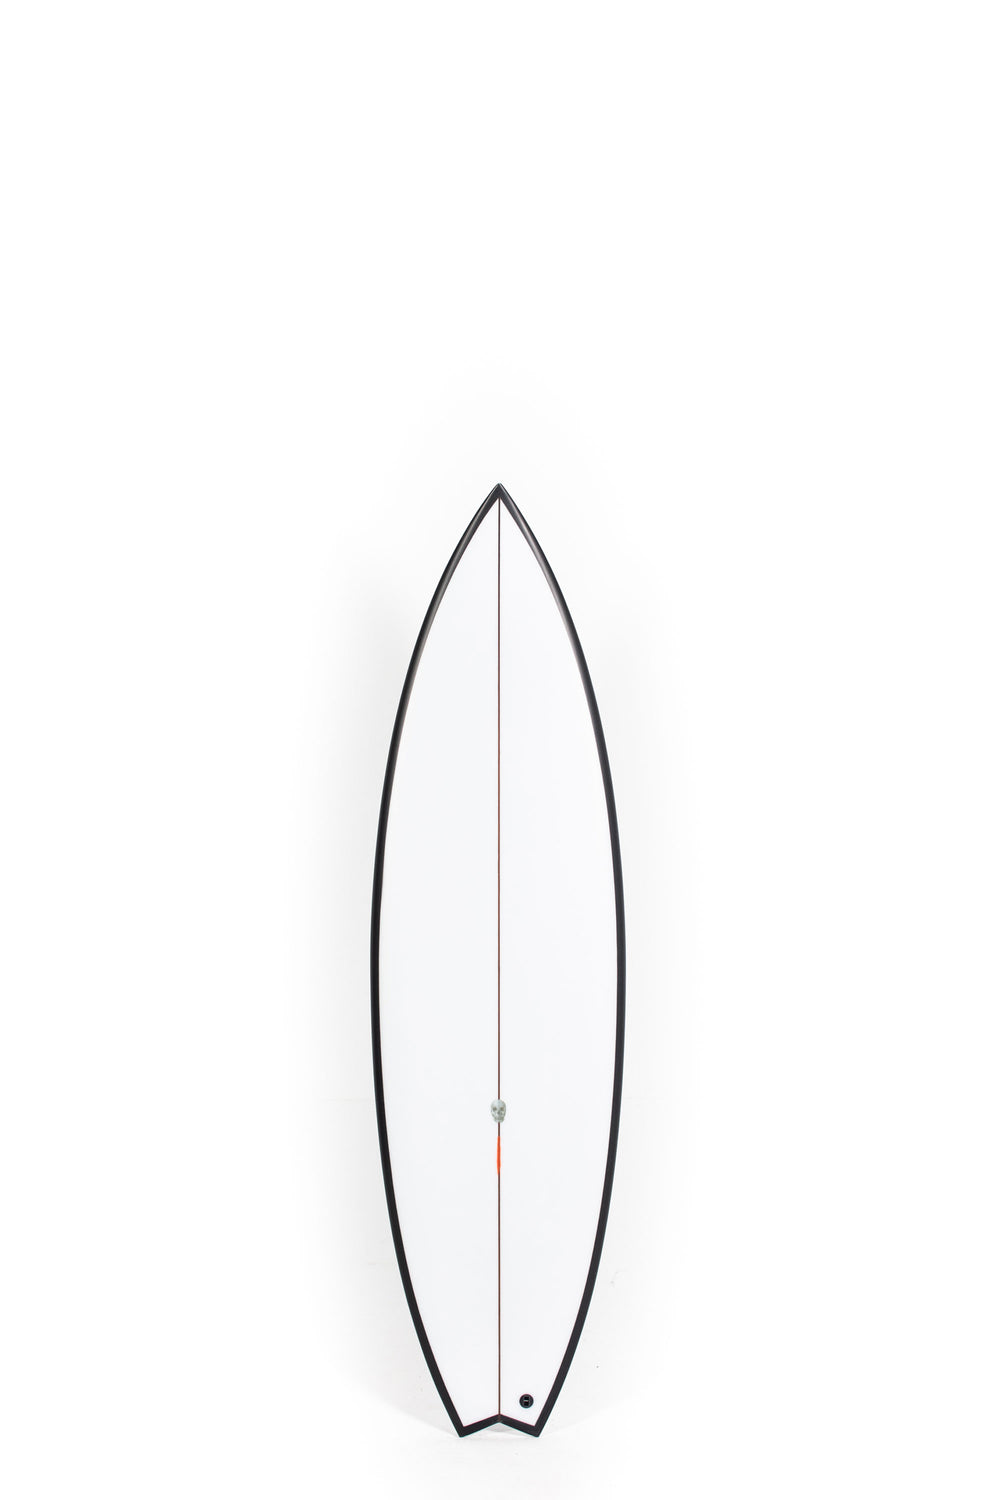 Pukas-Surf-Shop-Christenson-Surfboards-OP3-Chris-Christenson-6_0